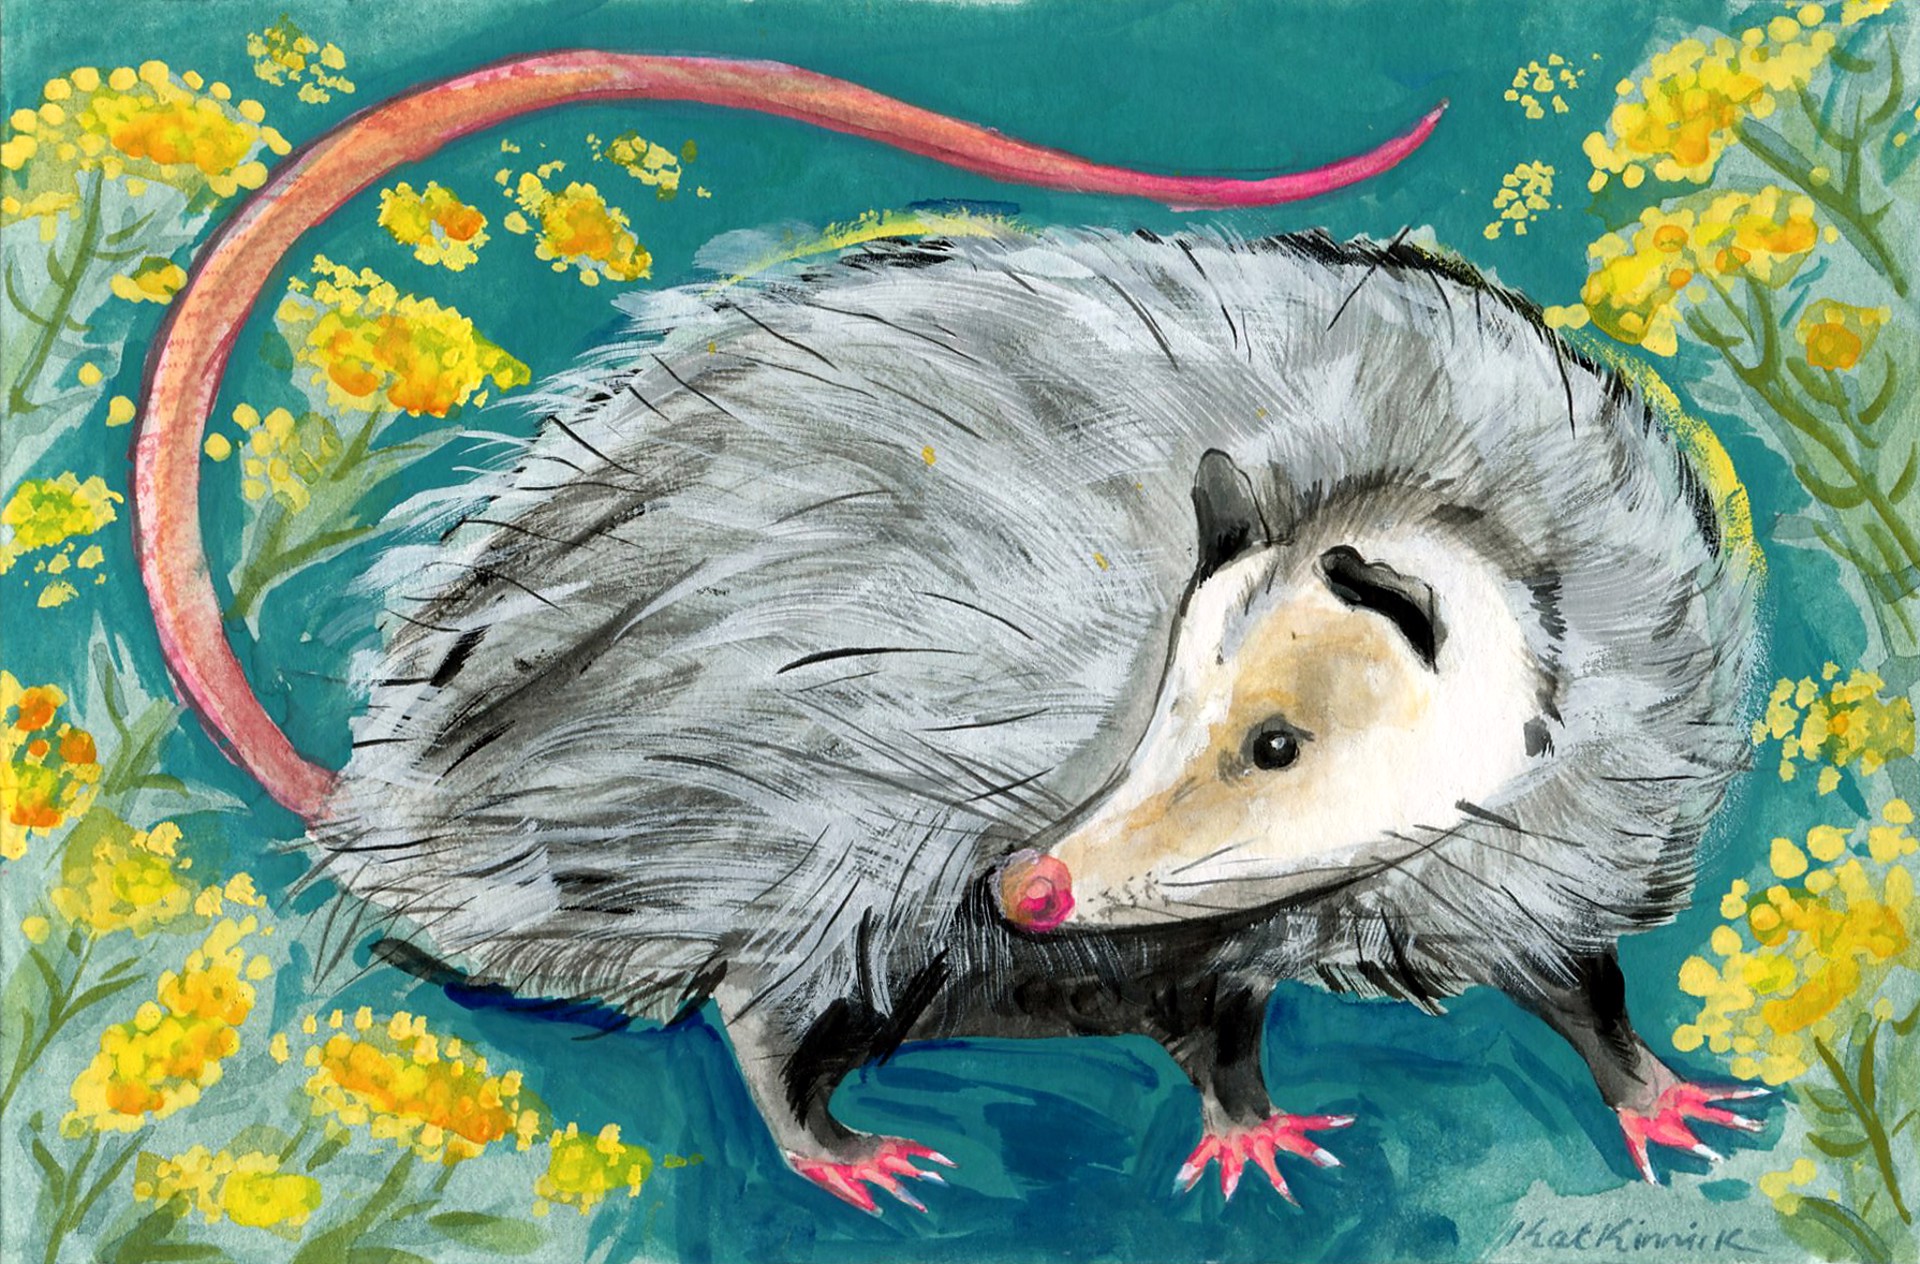 Possum & Yarrow by Kat Kinnick